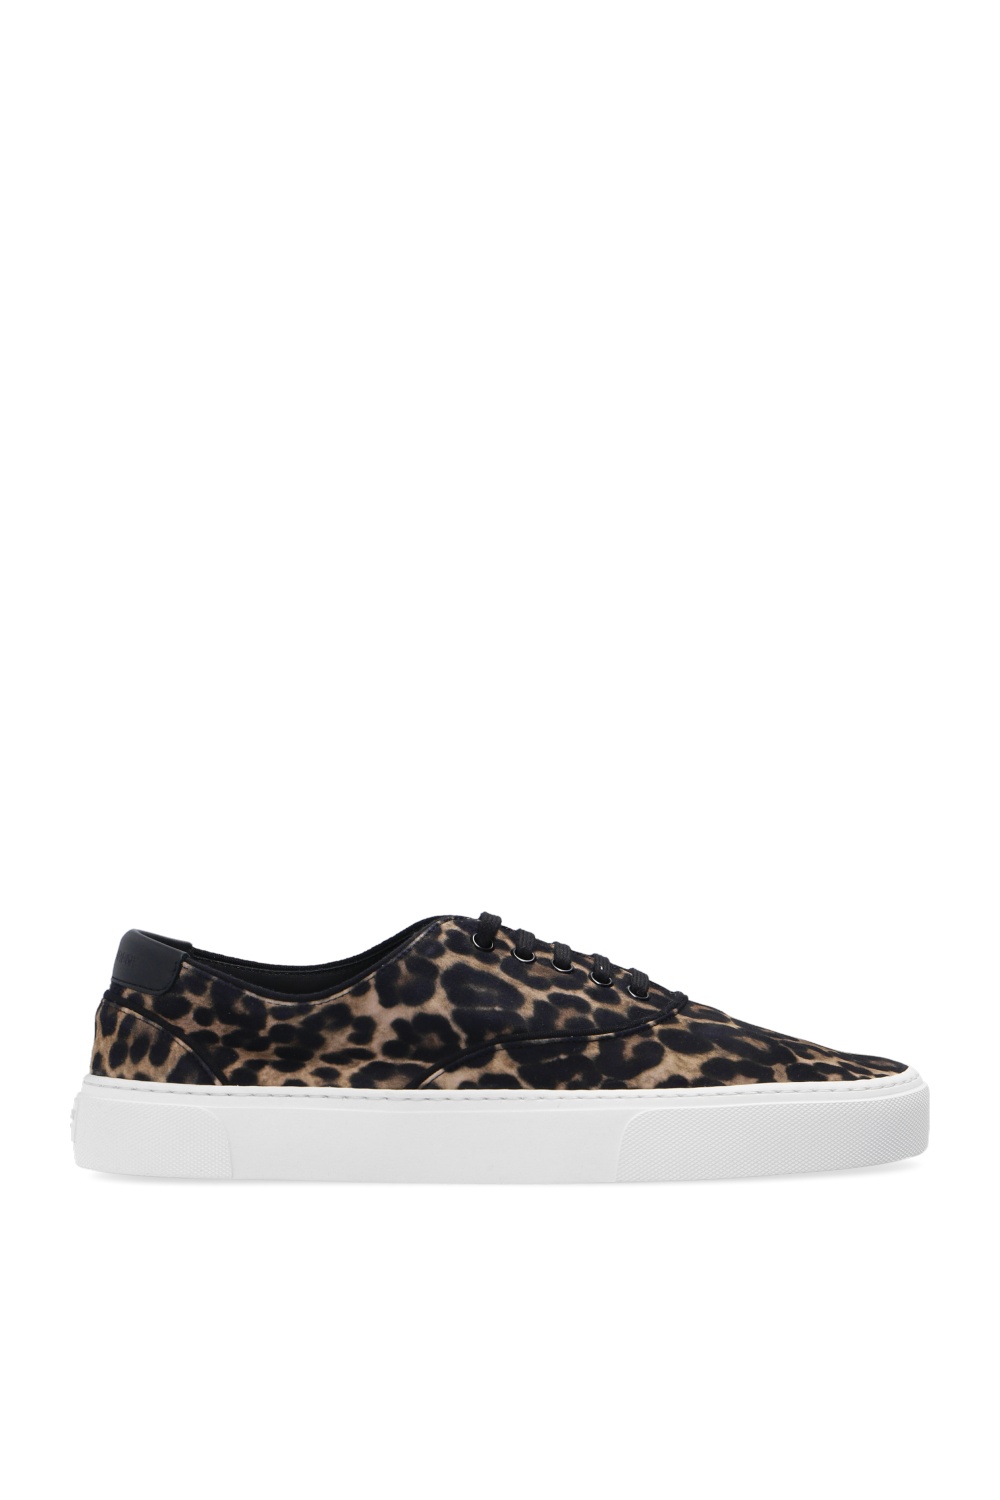 leopard print sneakers canada